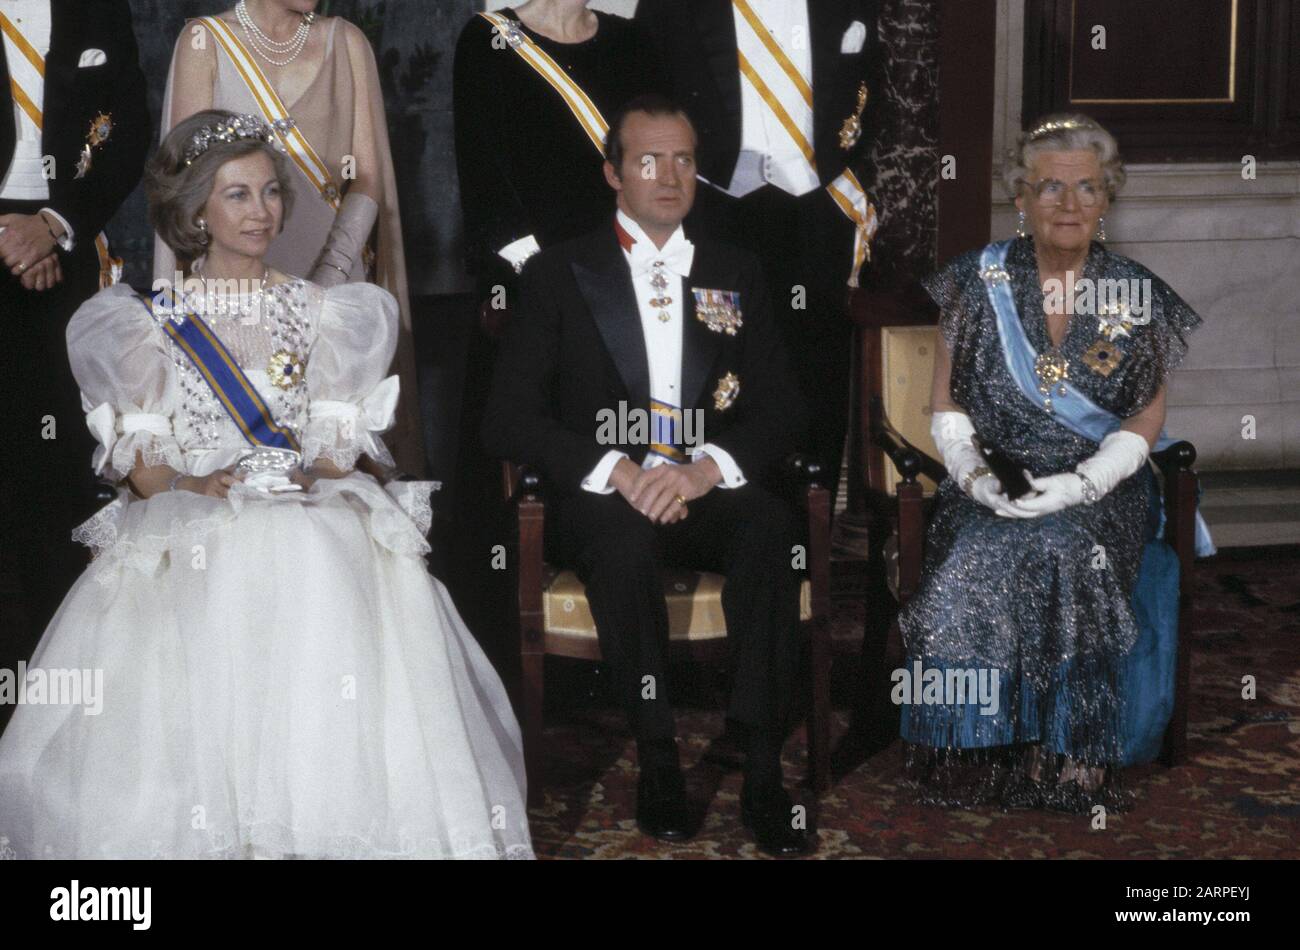 tripode-photo-royal-family-and-spanish-king-juan-carlos-and-queen-sophia-fecha-19-de-marzo-de-1980-palabras-clave-familia-real-nombre-juliana-reina-rey-juan-carlos-sofia-reina-de-espana-2arpeyj.jpg